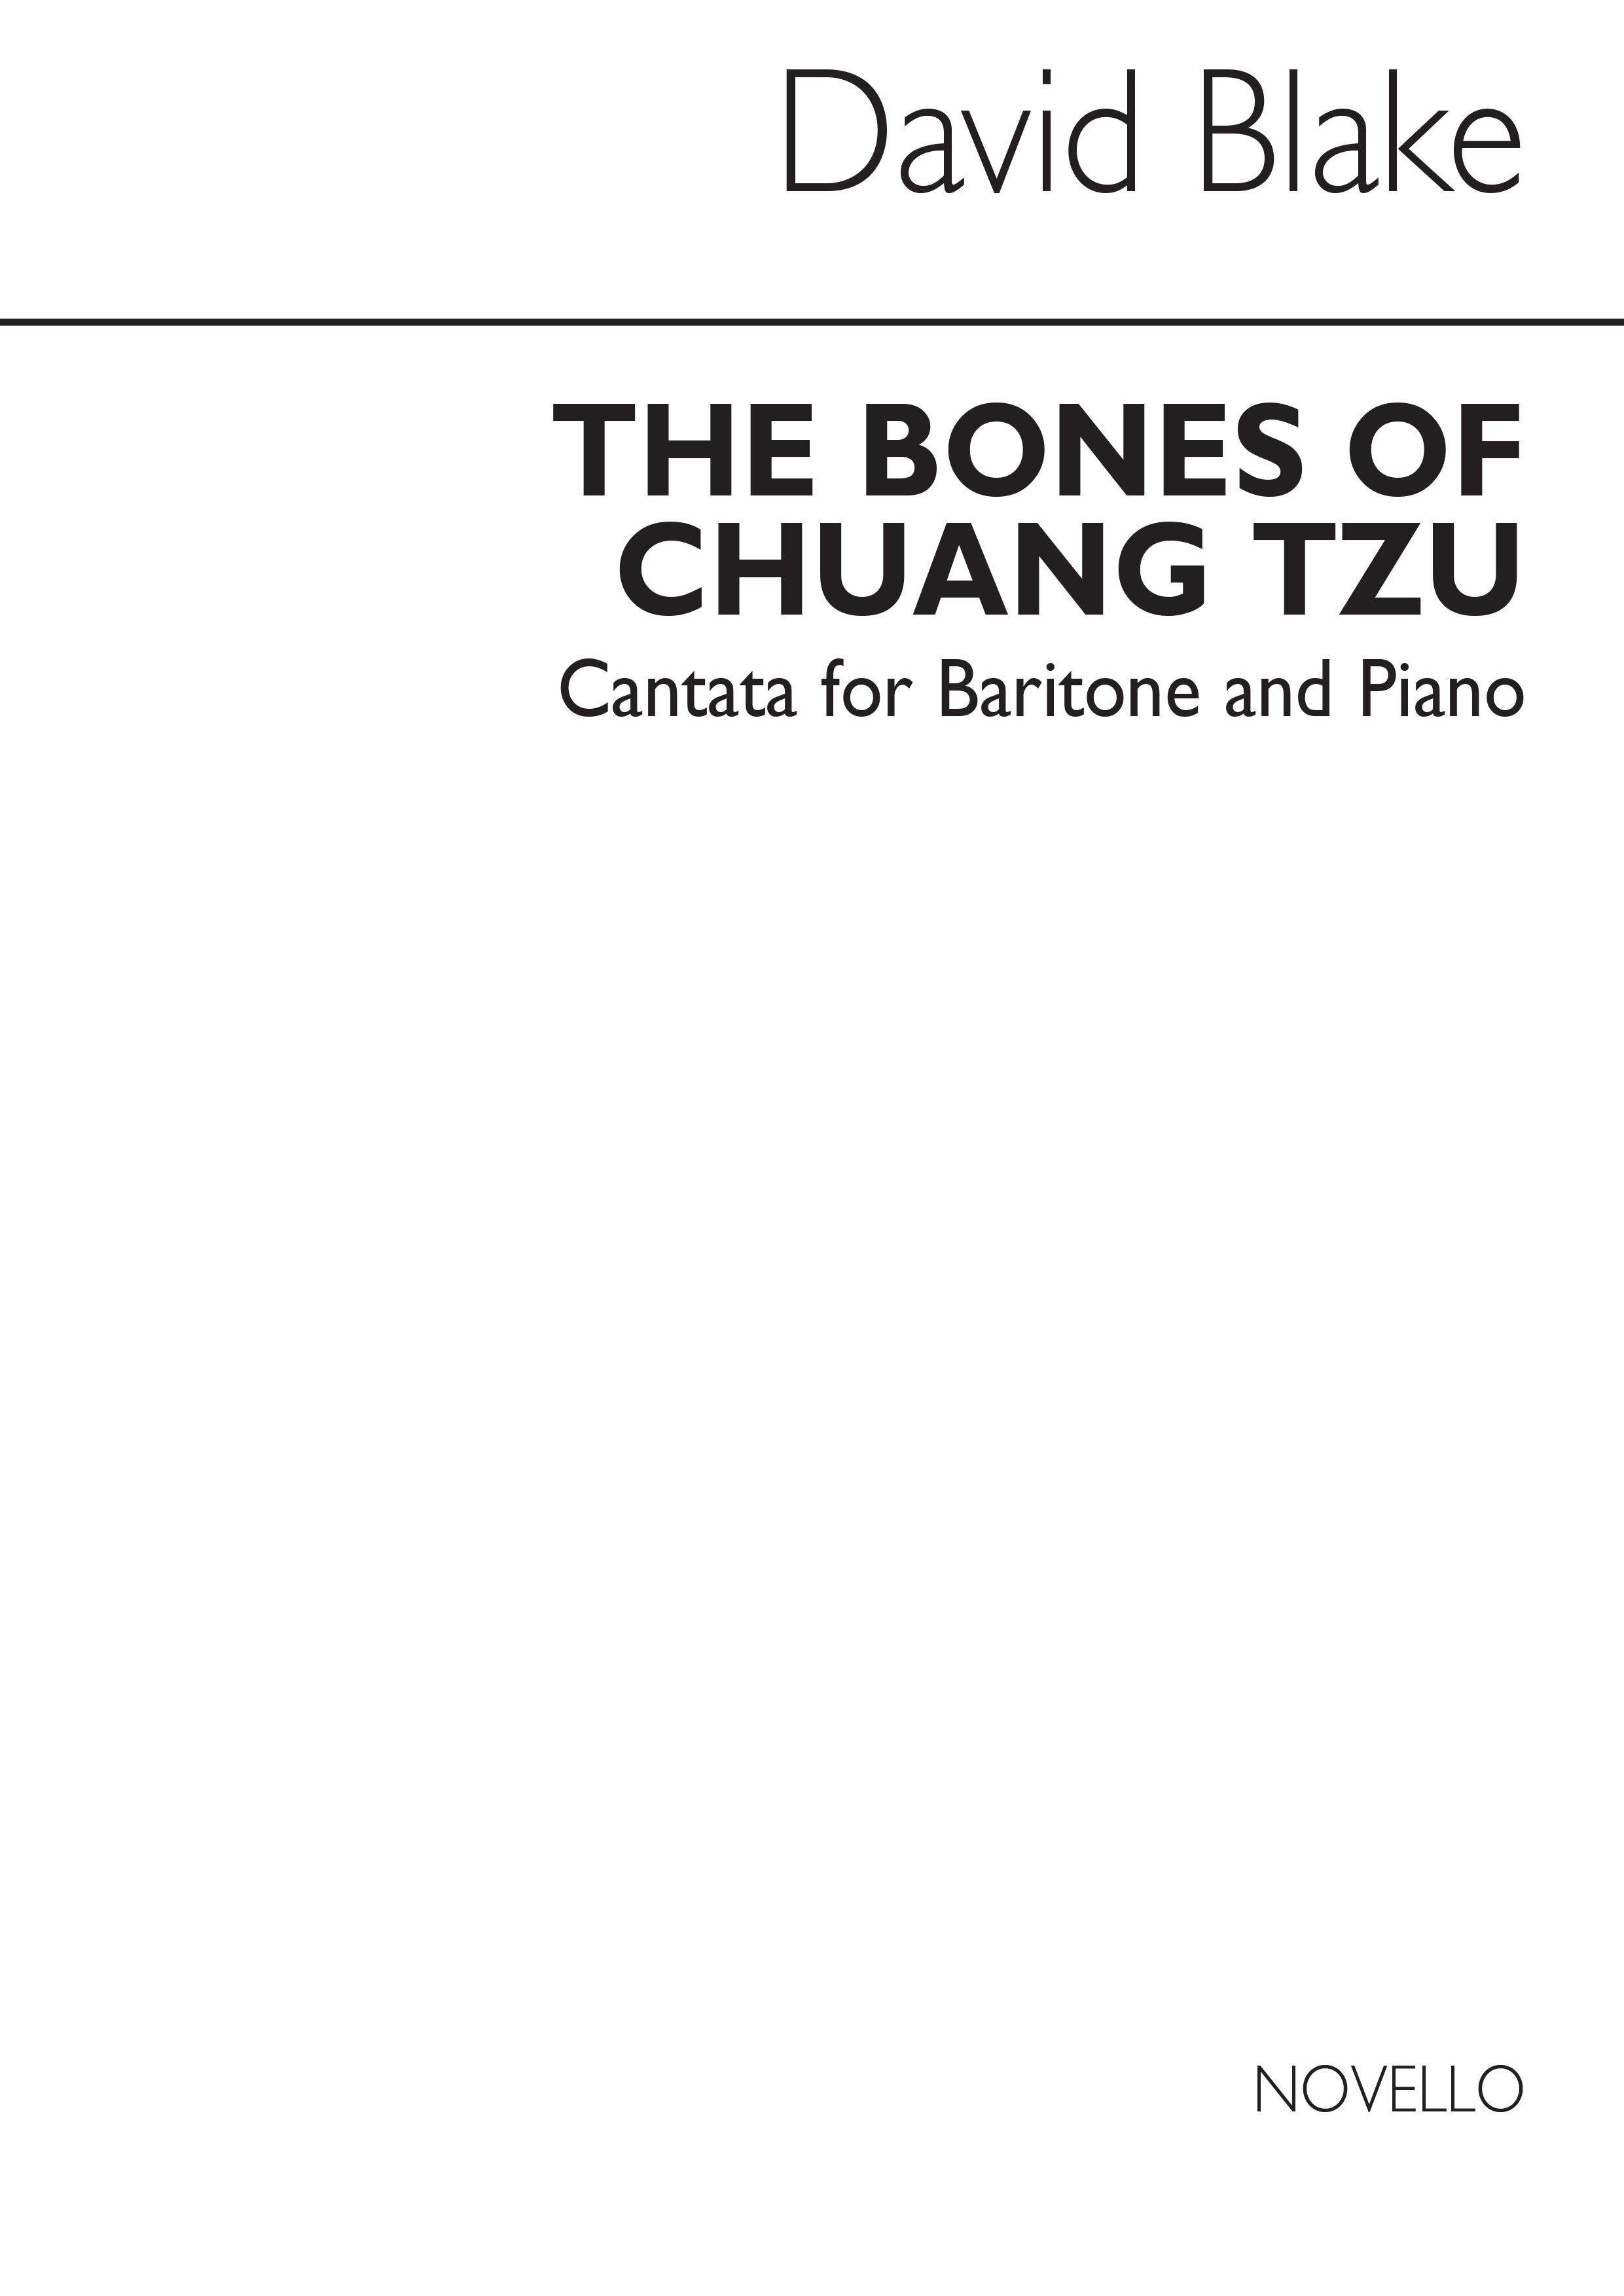 David Blake: Bones Of Chuang Tzu for Baritone Solo with Piano accompaniment